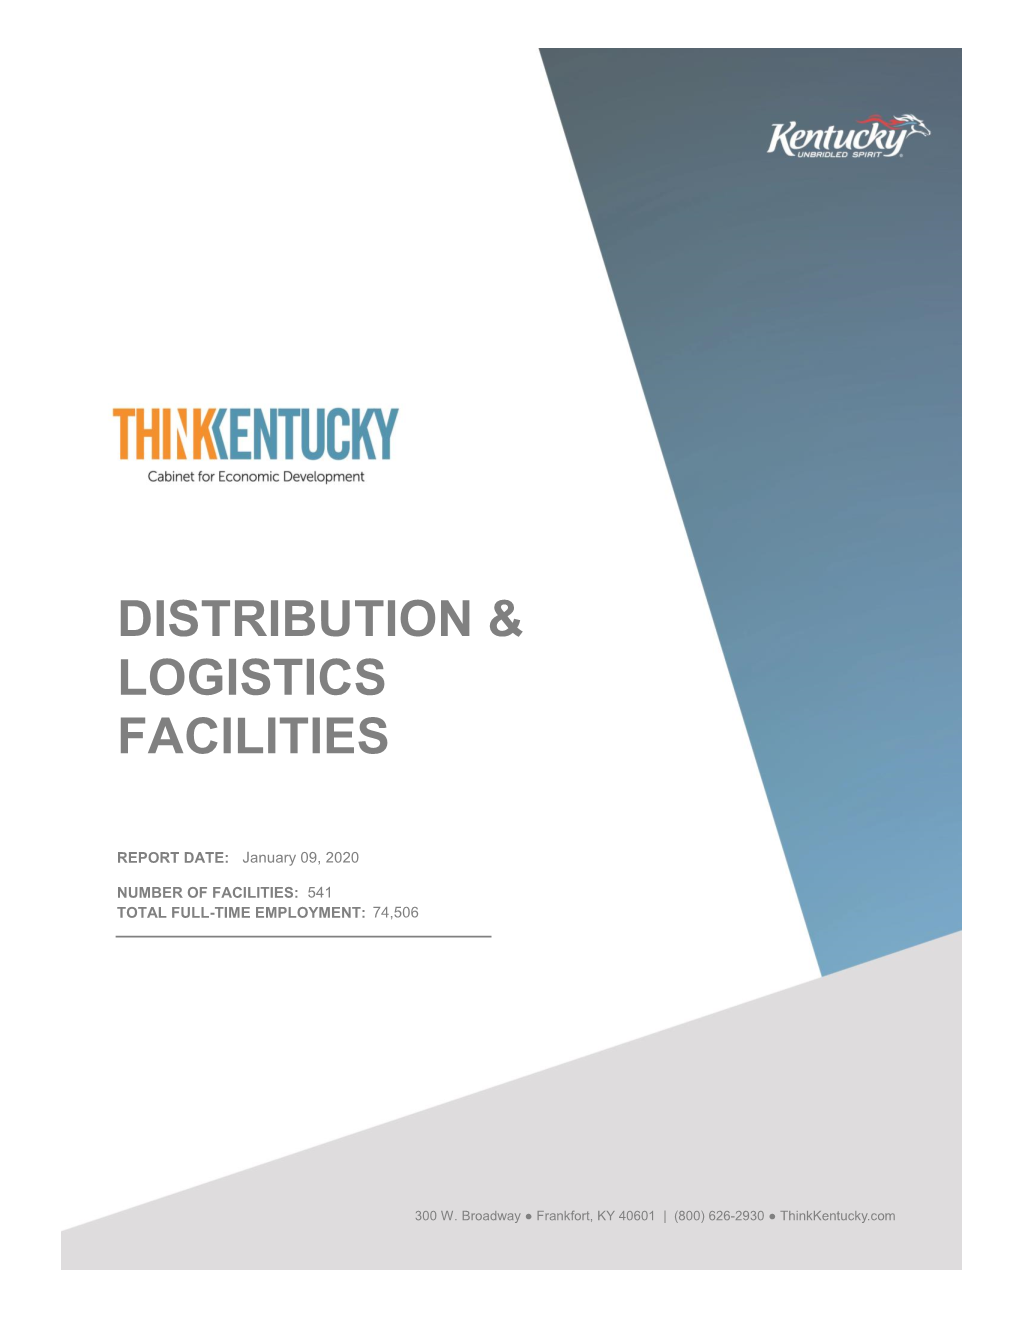 Distribution & Logistics Facilities